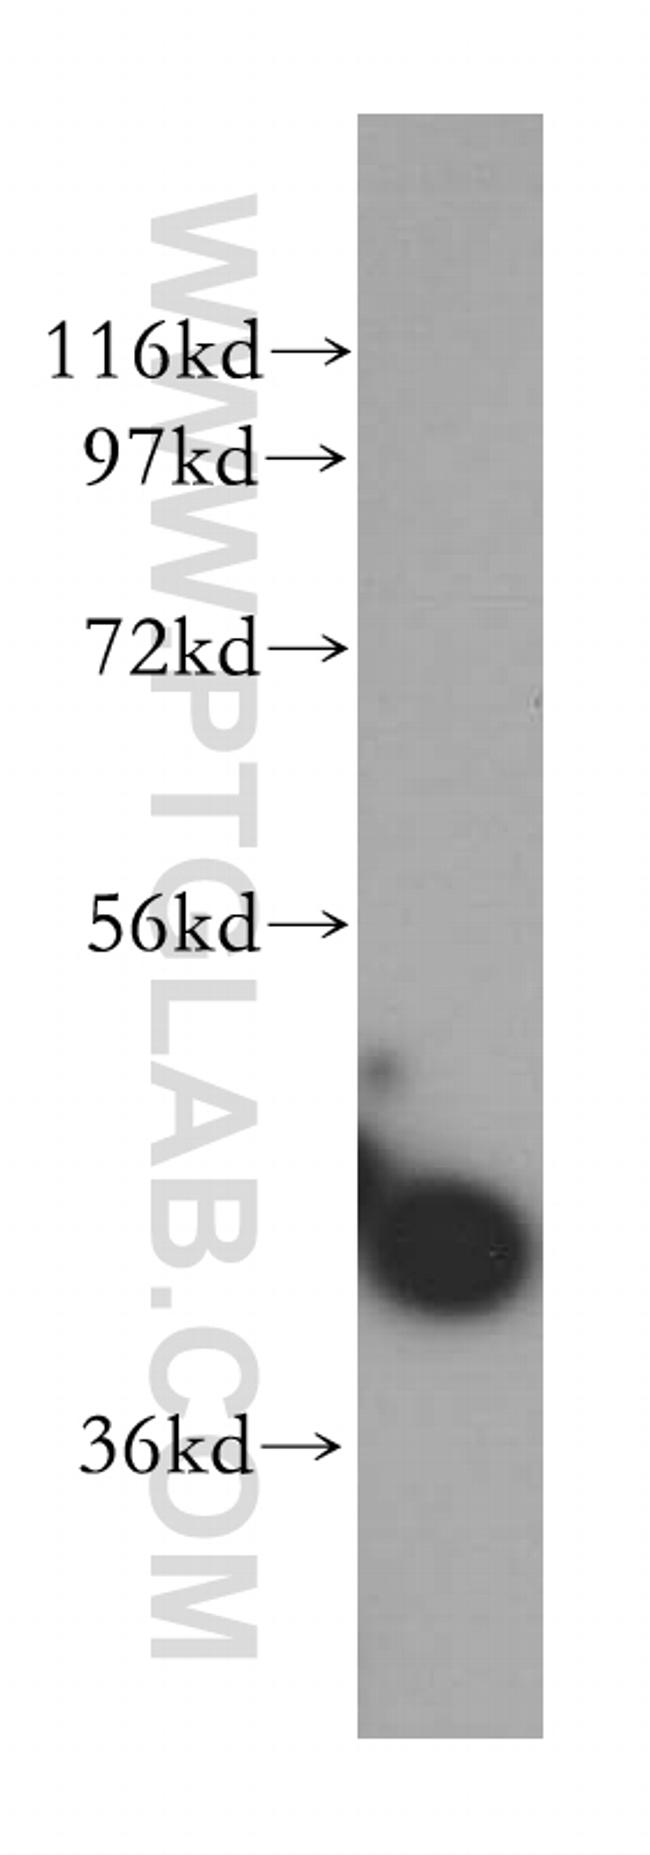 UROD Antibody in Western Blot (WB)